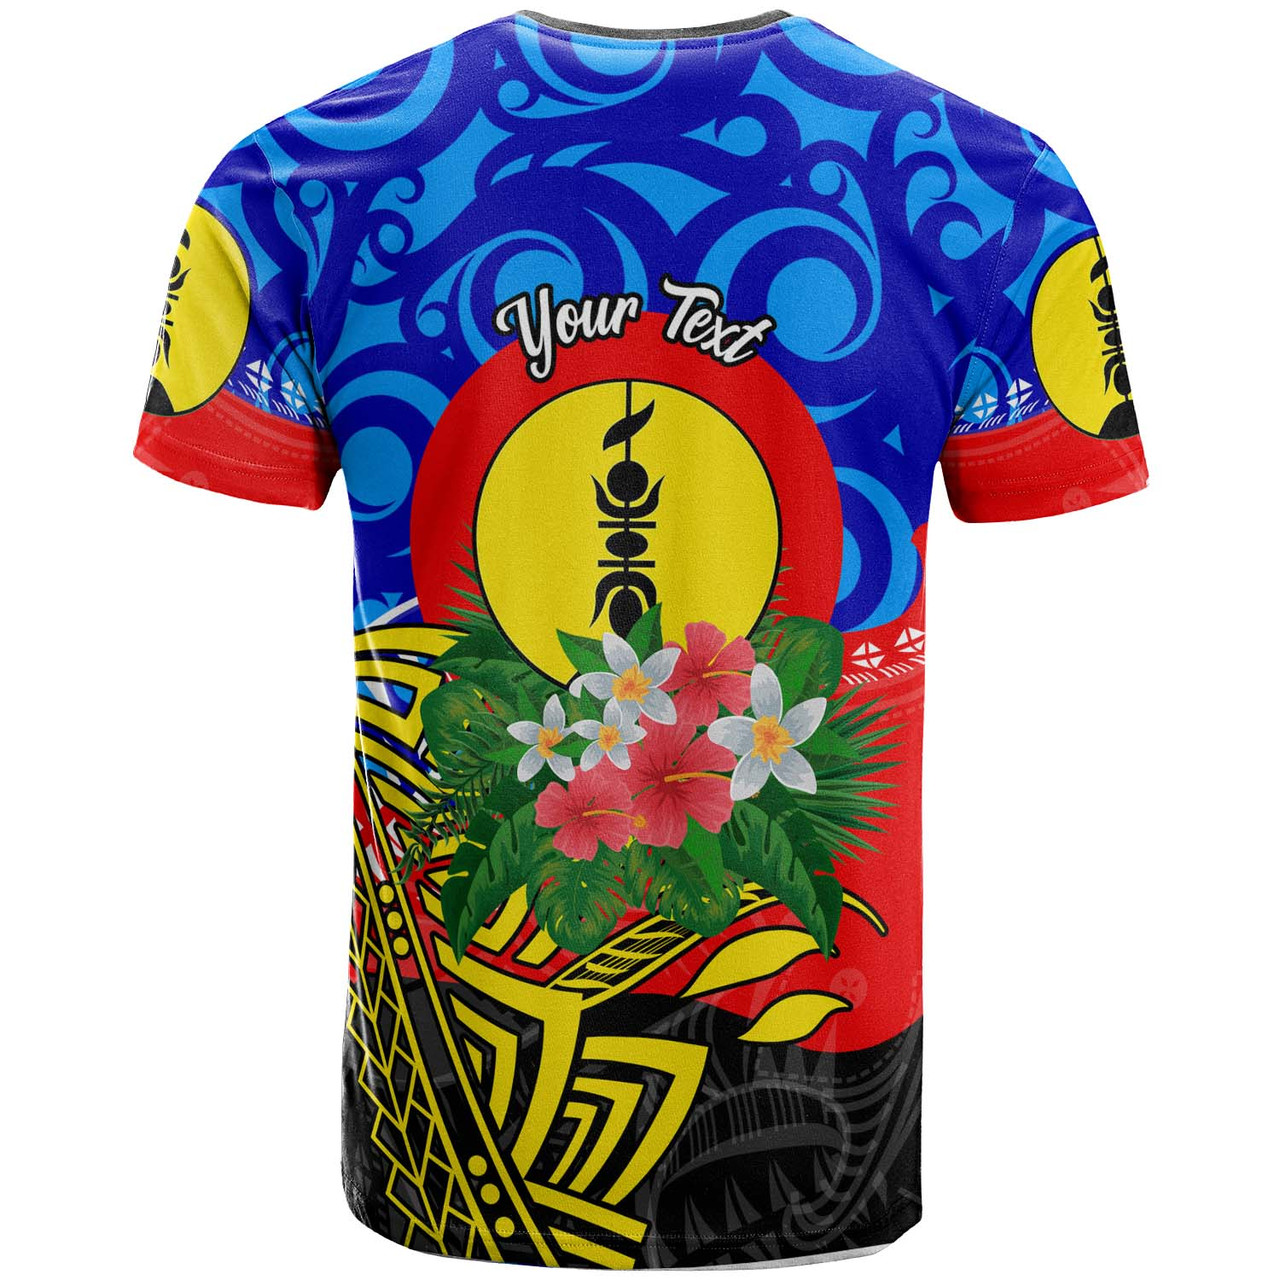 New Caledonia T-shirt - Custom Personalised "Land of Speech, Land of Sharing" with Polynesian T-shirt